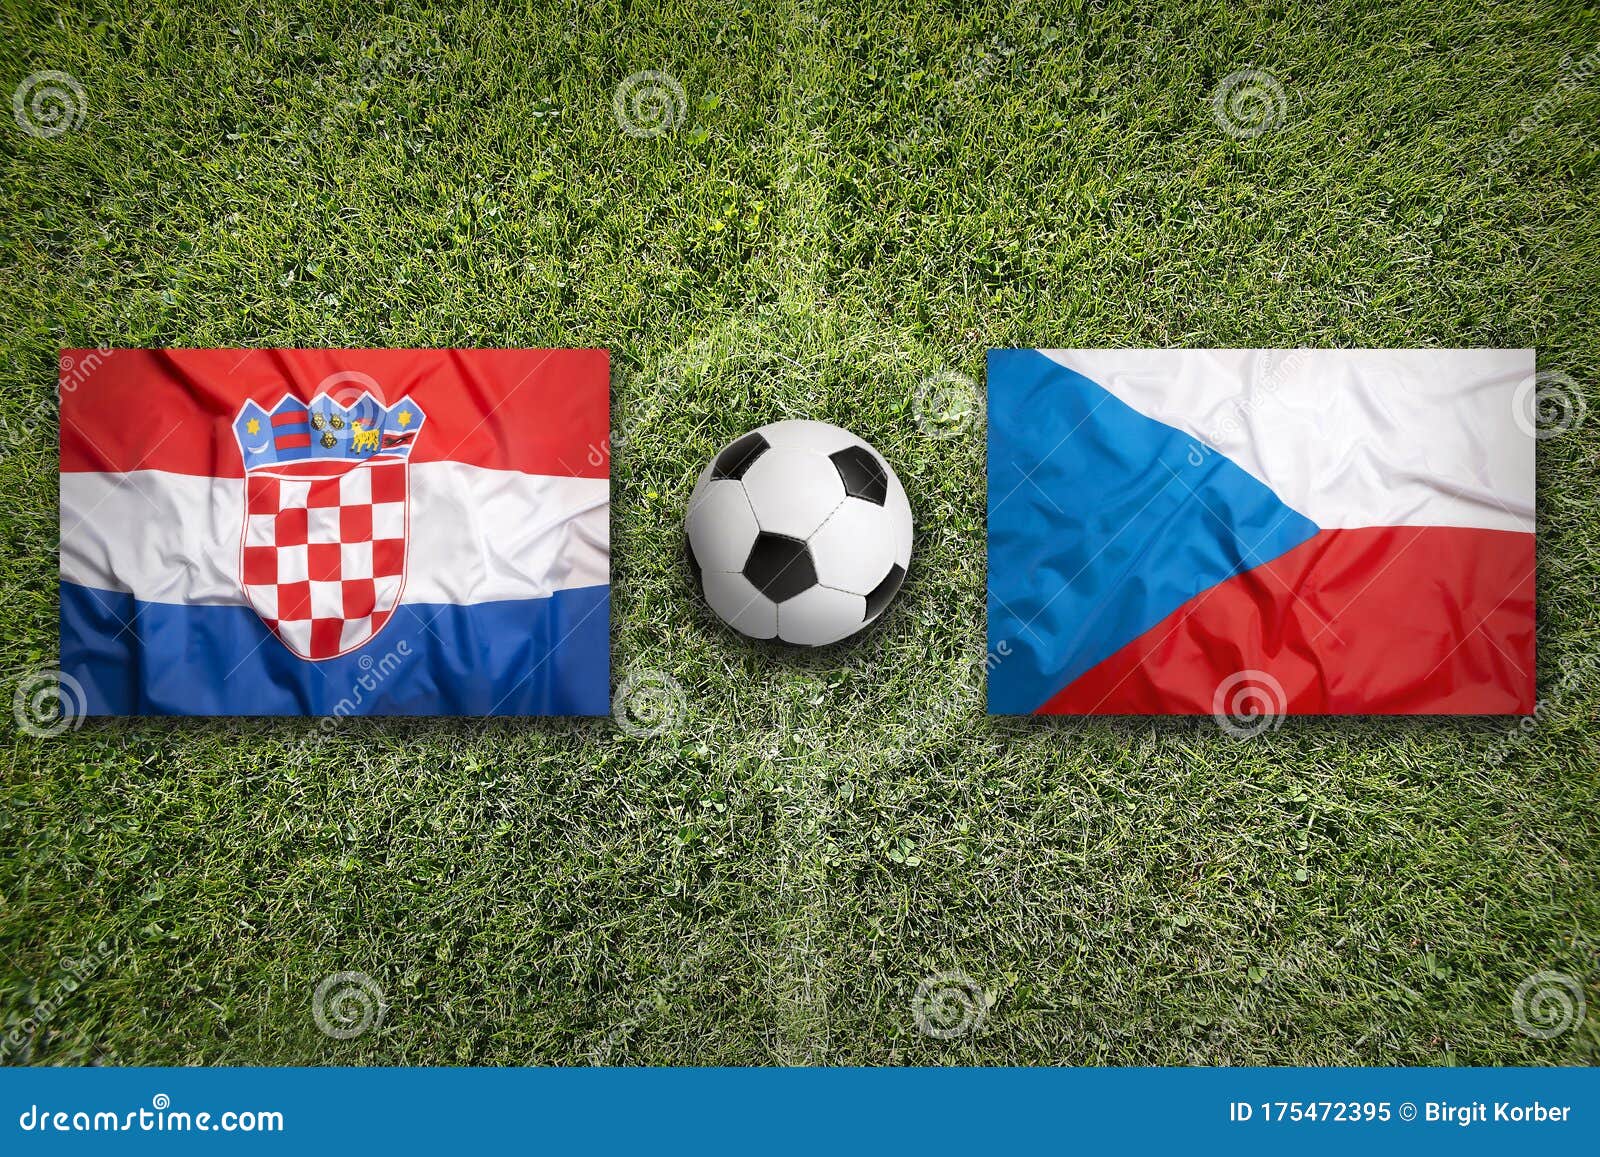 Vs republic croatia czech Today at